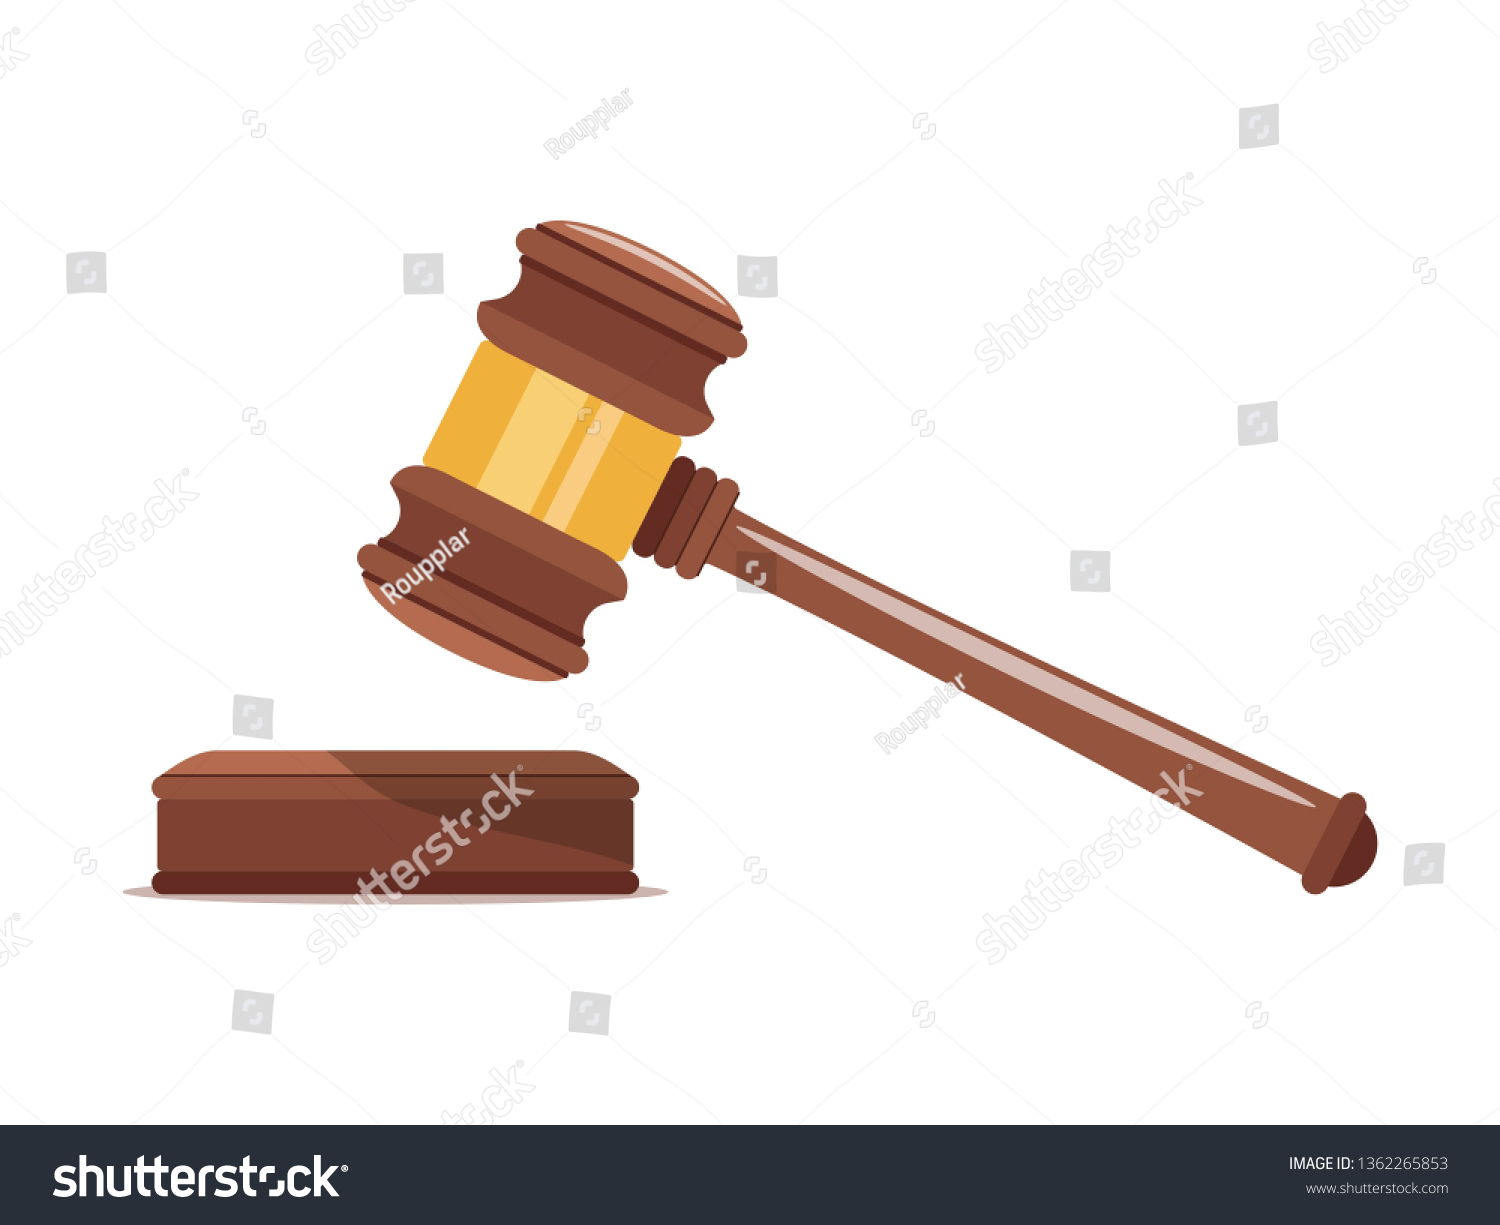 SVG of Judge wood hammer with a wooden stand. Gavel justice symbol. Template design for adjudication of sentences and bills, court, justice, auction. Vector illustration svg